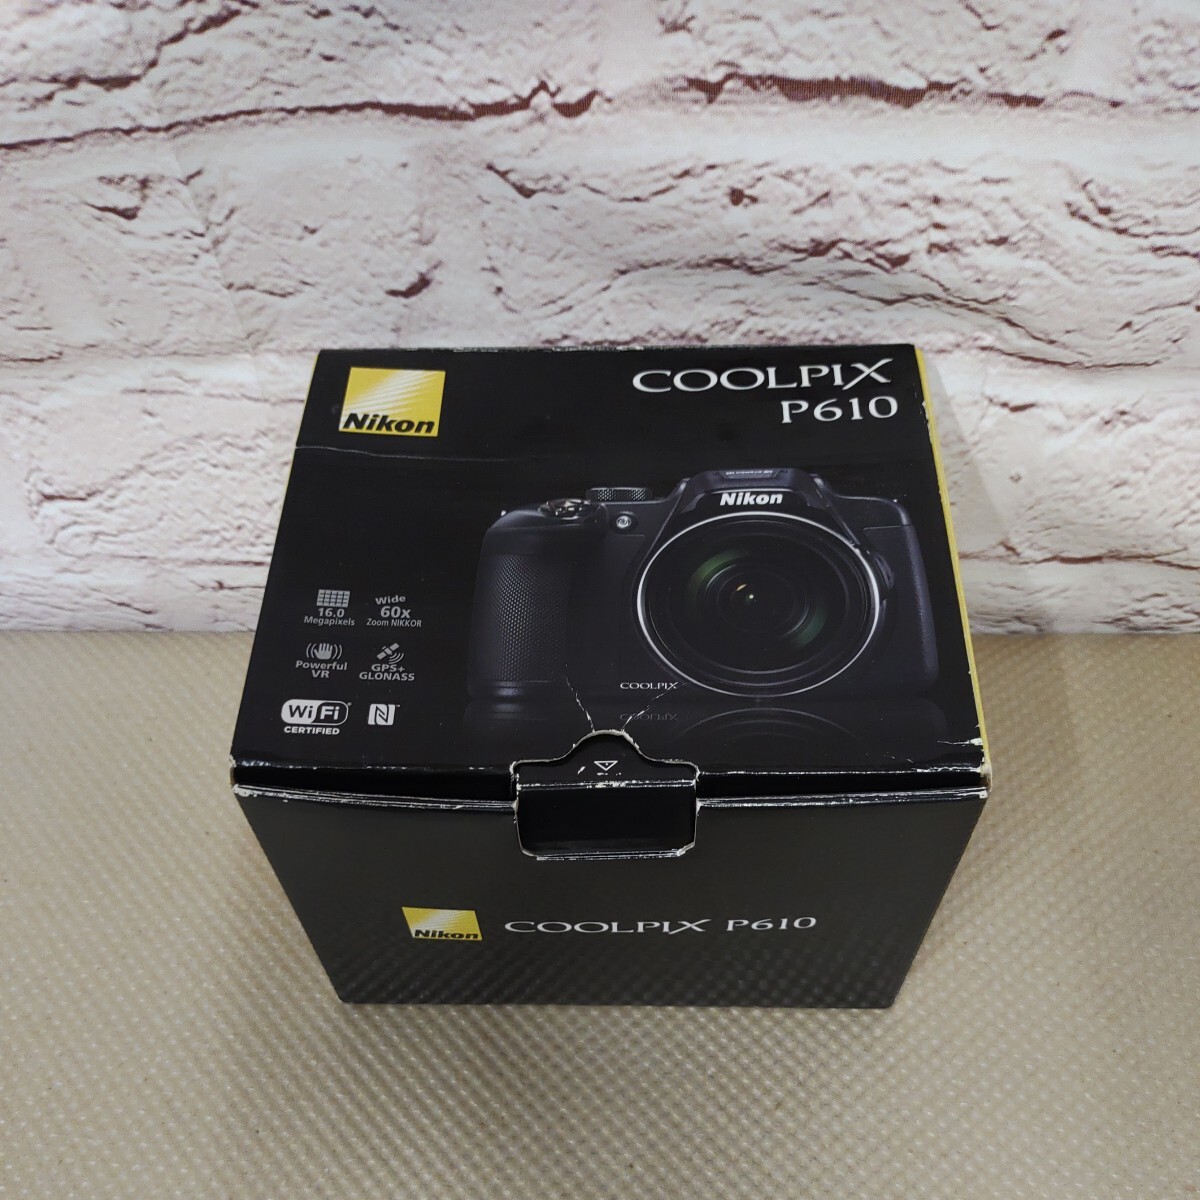 A04197 1 иен ~ Nikon COOLPIX P610 компактный цифровой фотоаппарат темно синий teji цифровая камера Nikon 